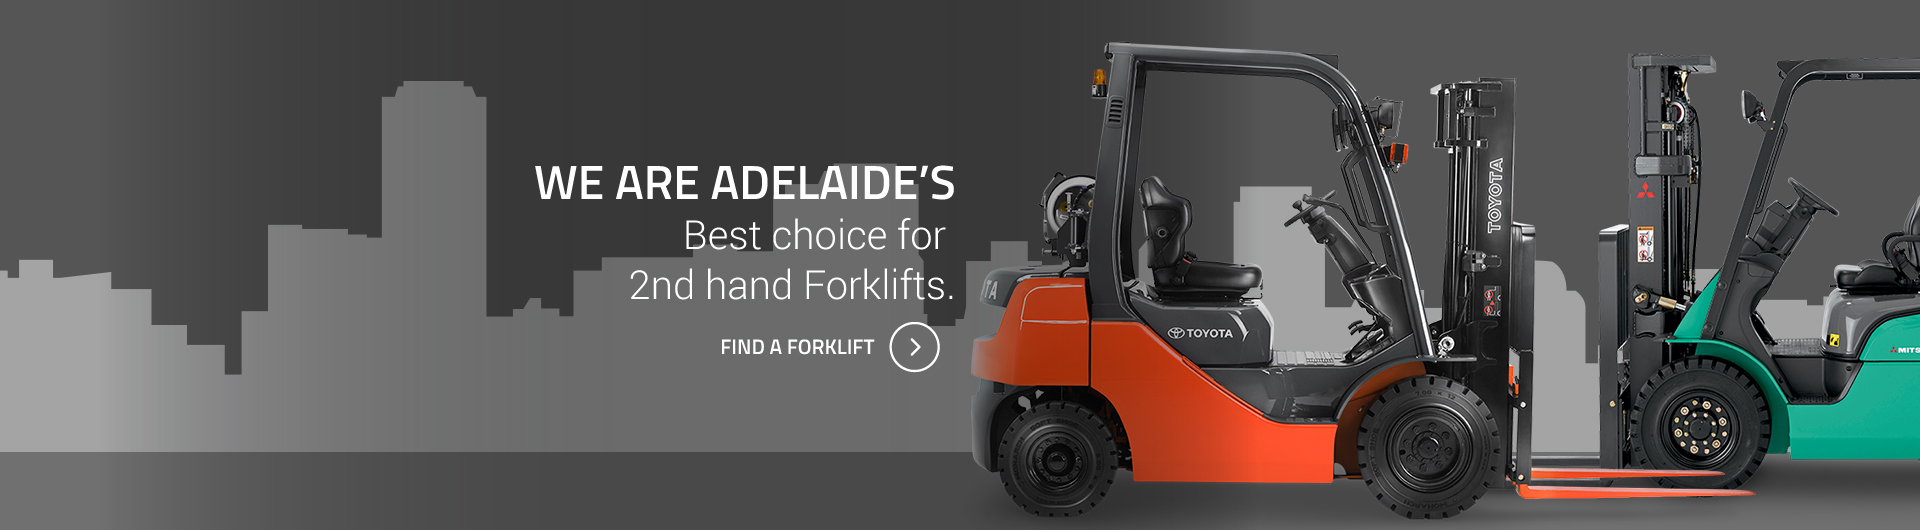 Formidable Forklifts Adelaide